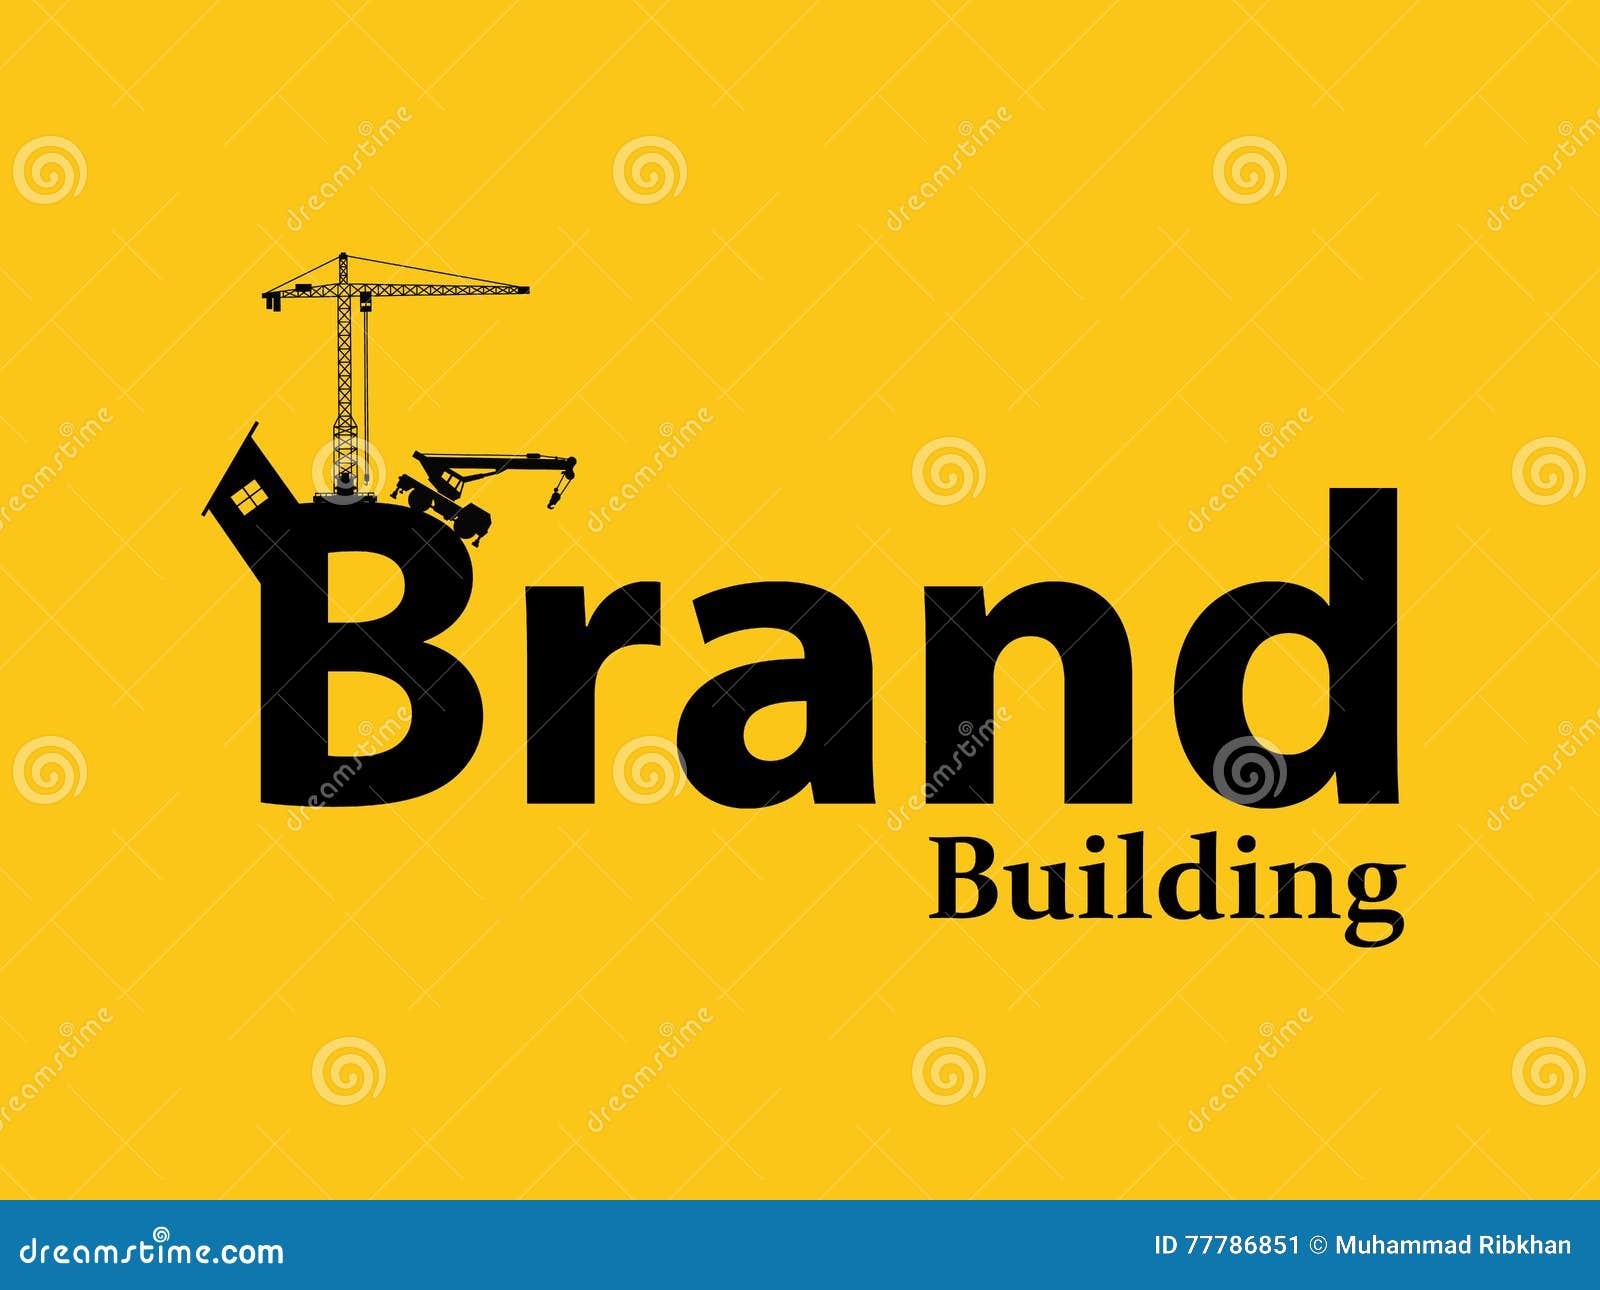 brand branding building development  with sillhouette text crane bulldozer and construction